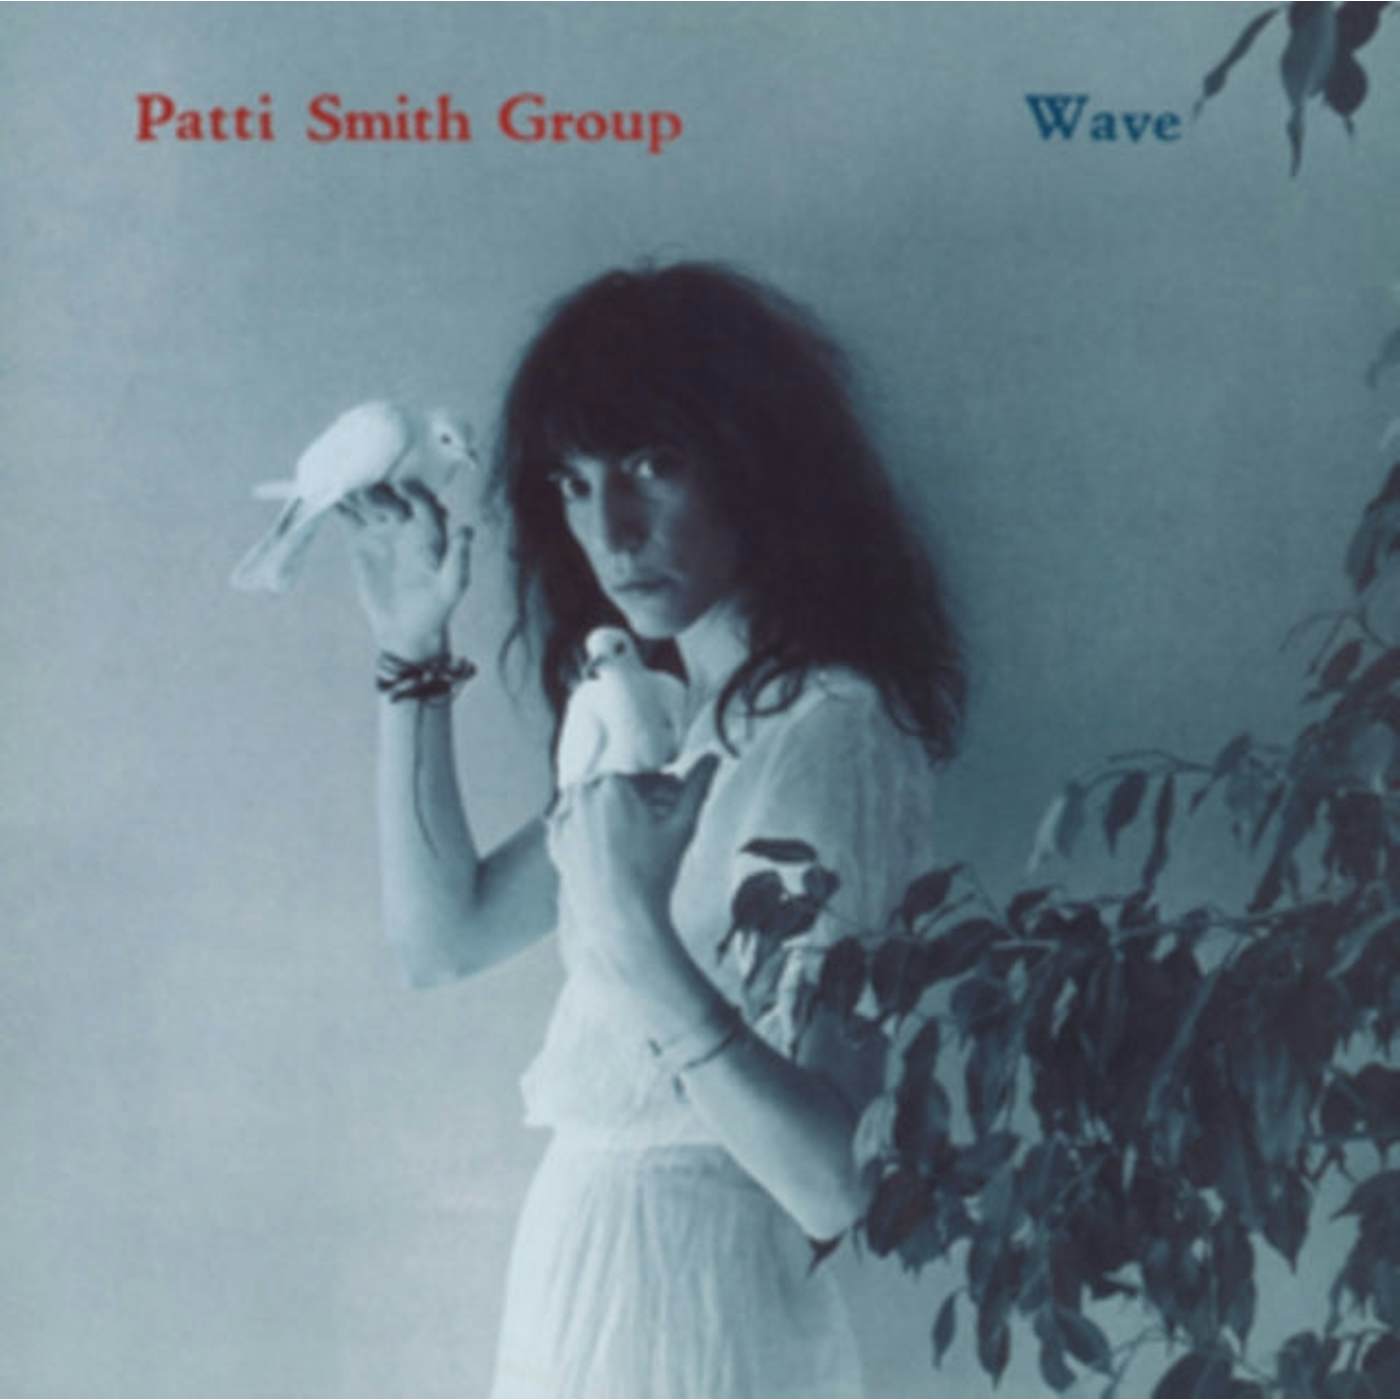 Patti Smith Group LP Vinyl Record - Wave